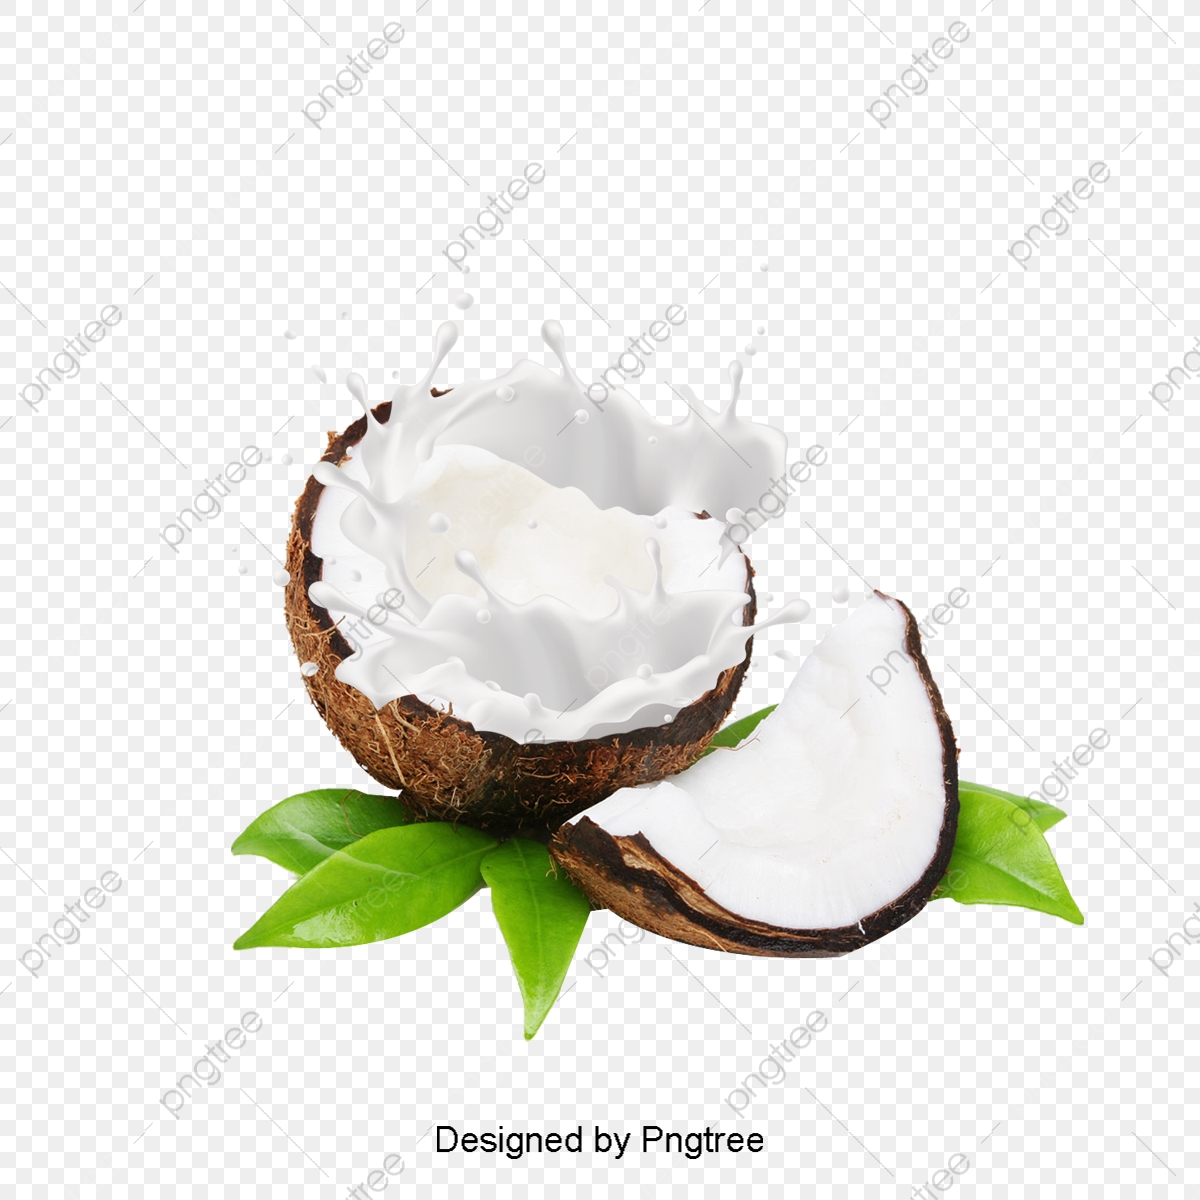 coconut clipart coconut cream